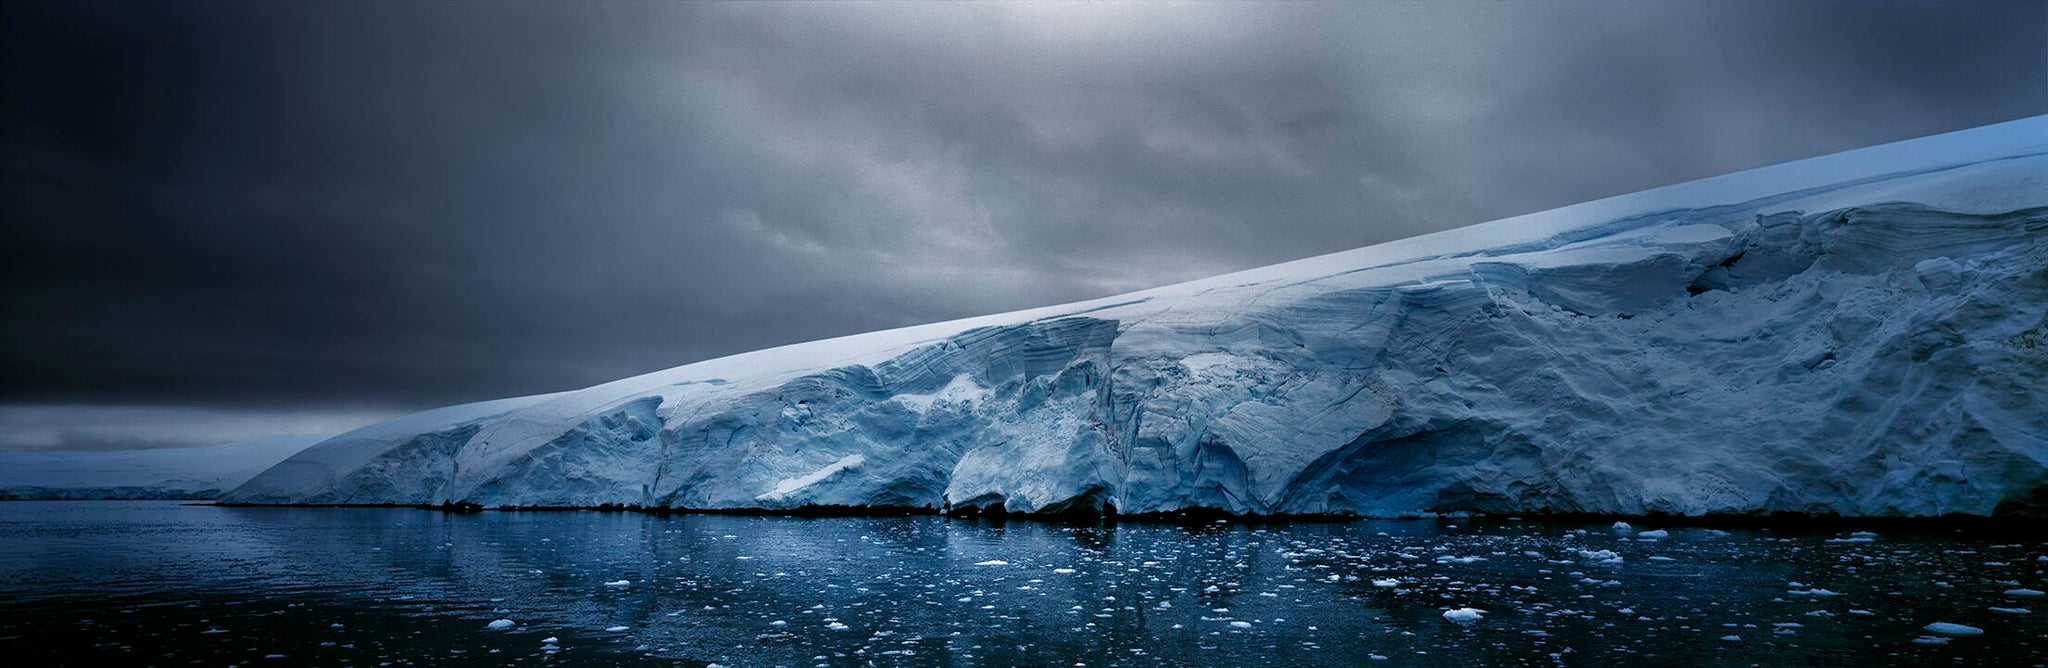 Iceberg XXXII